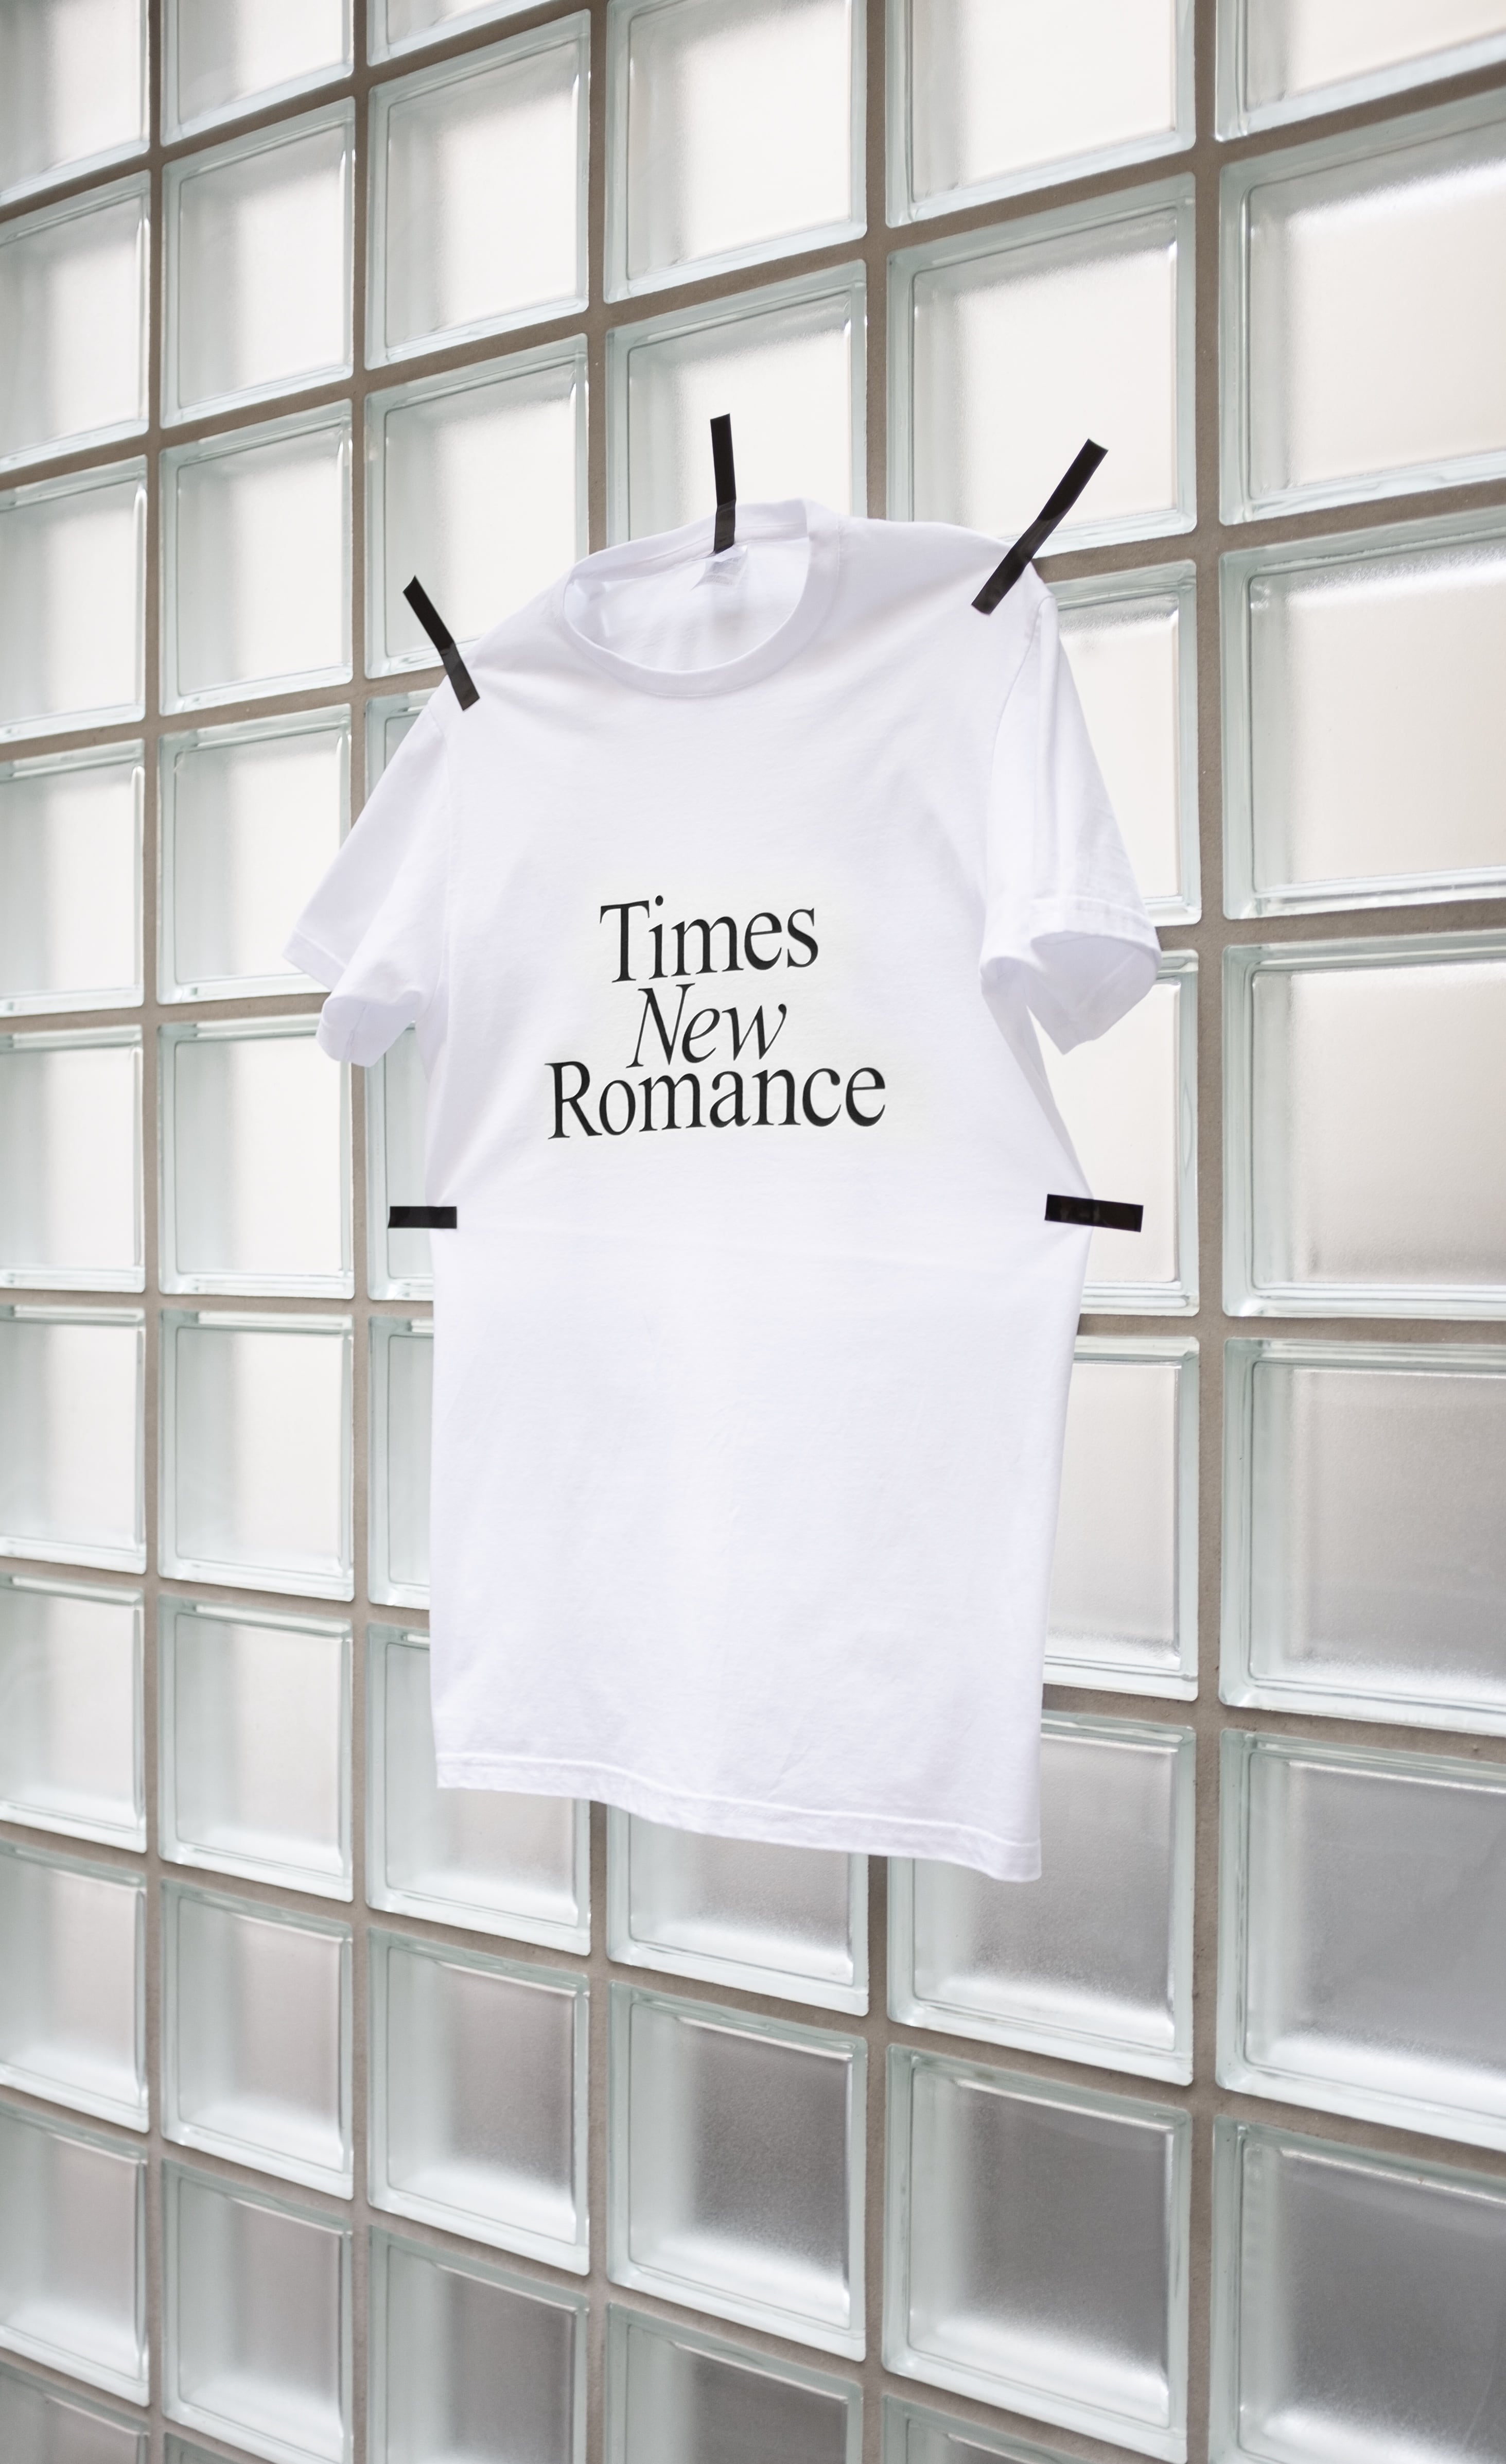 The Times New Romance Shirt designed by Hendrik Schwab